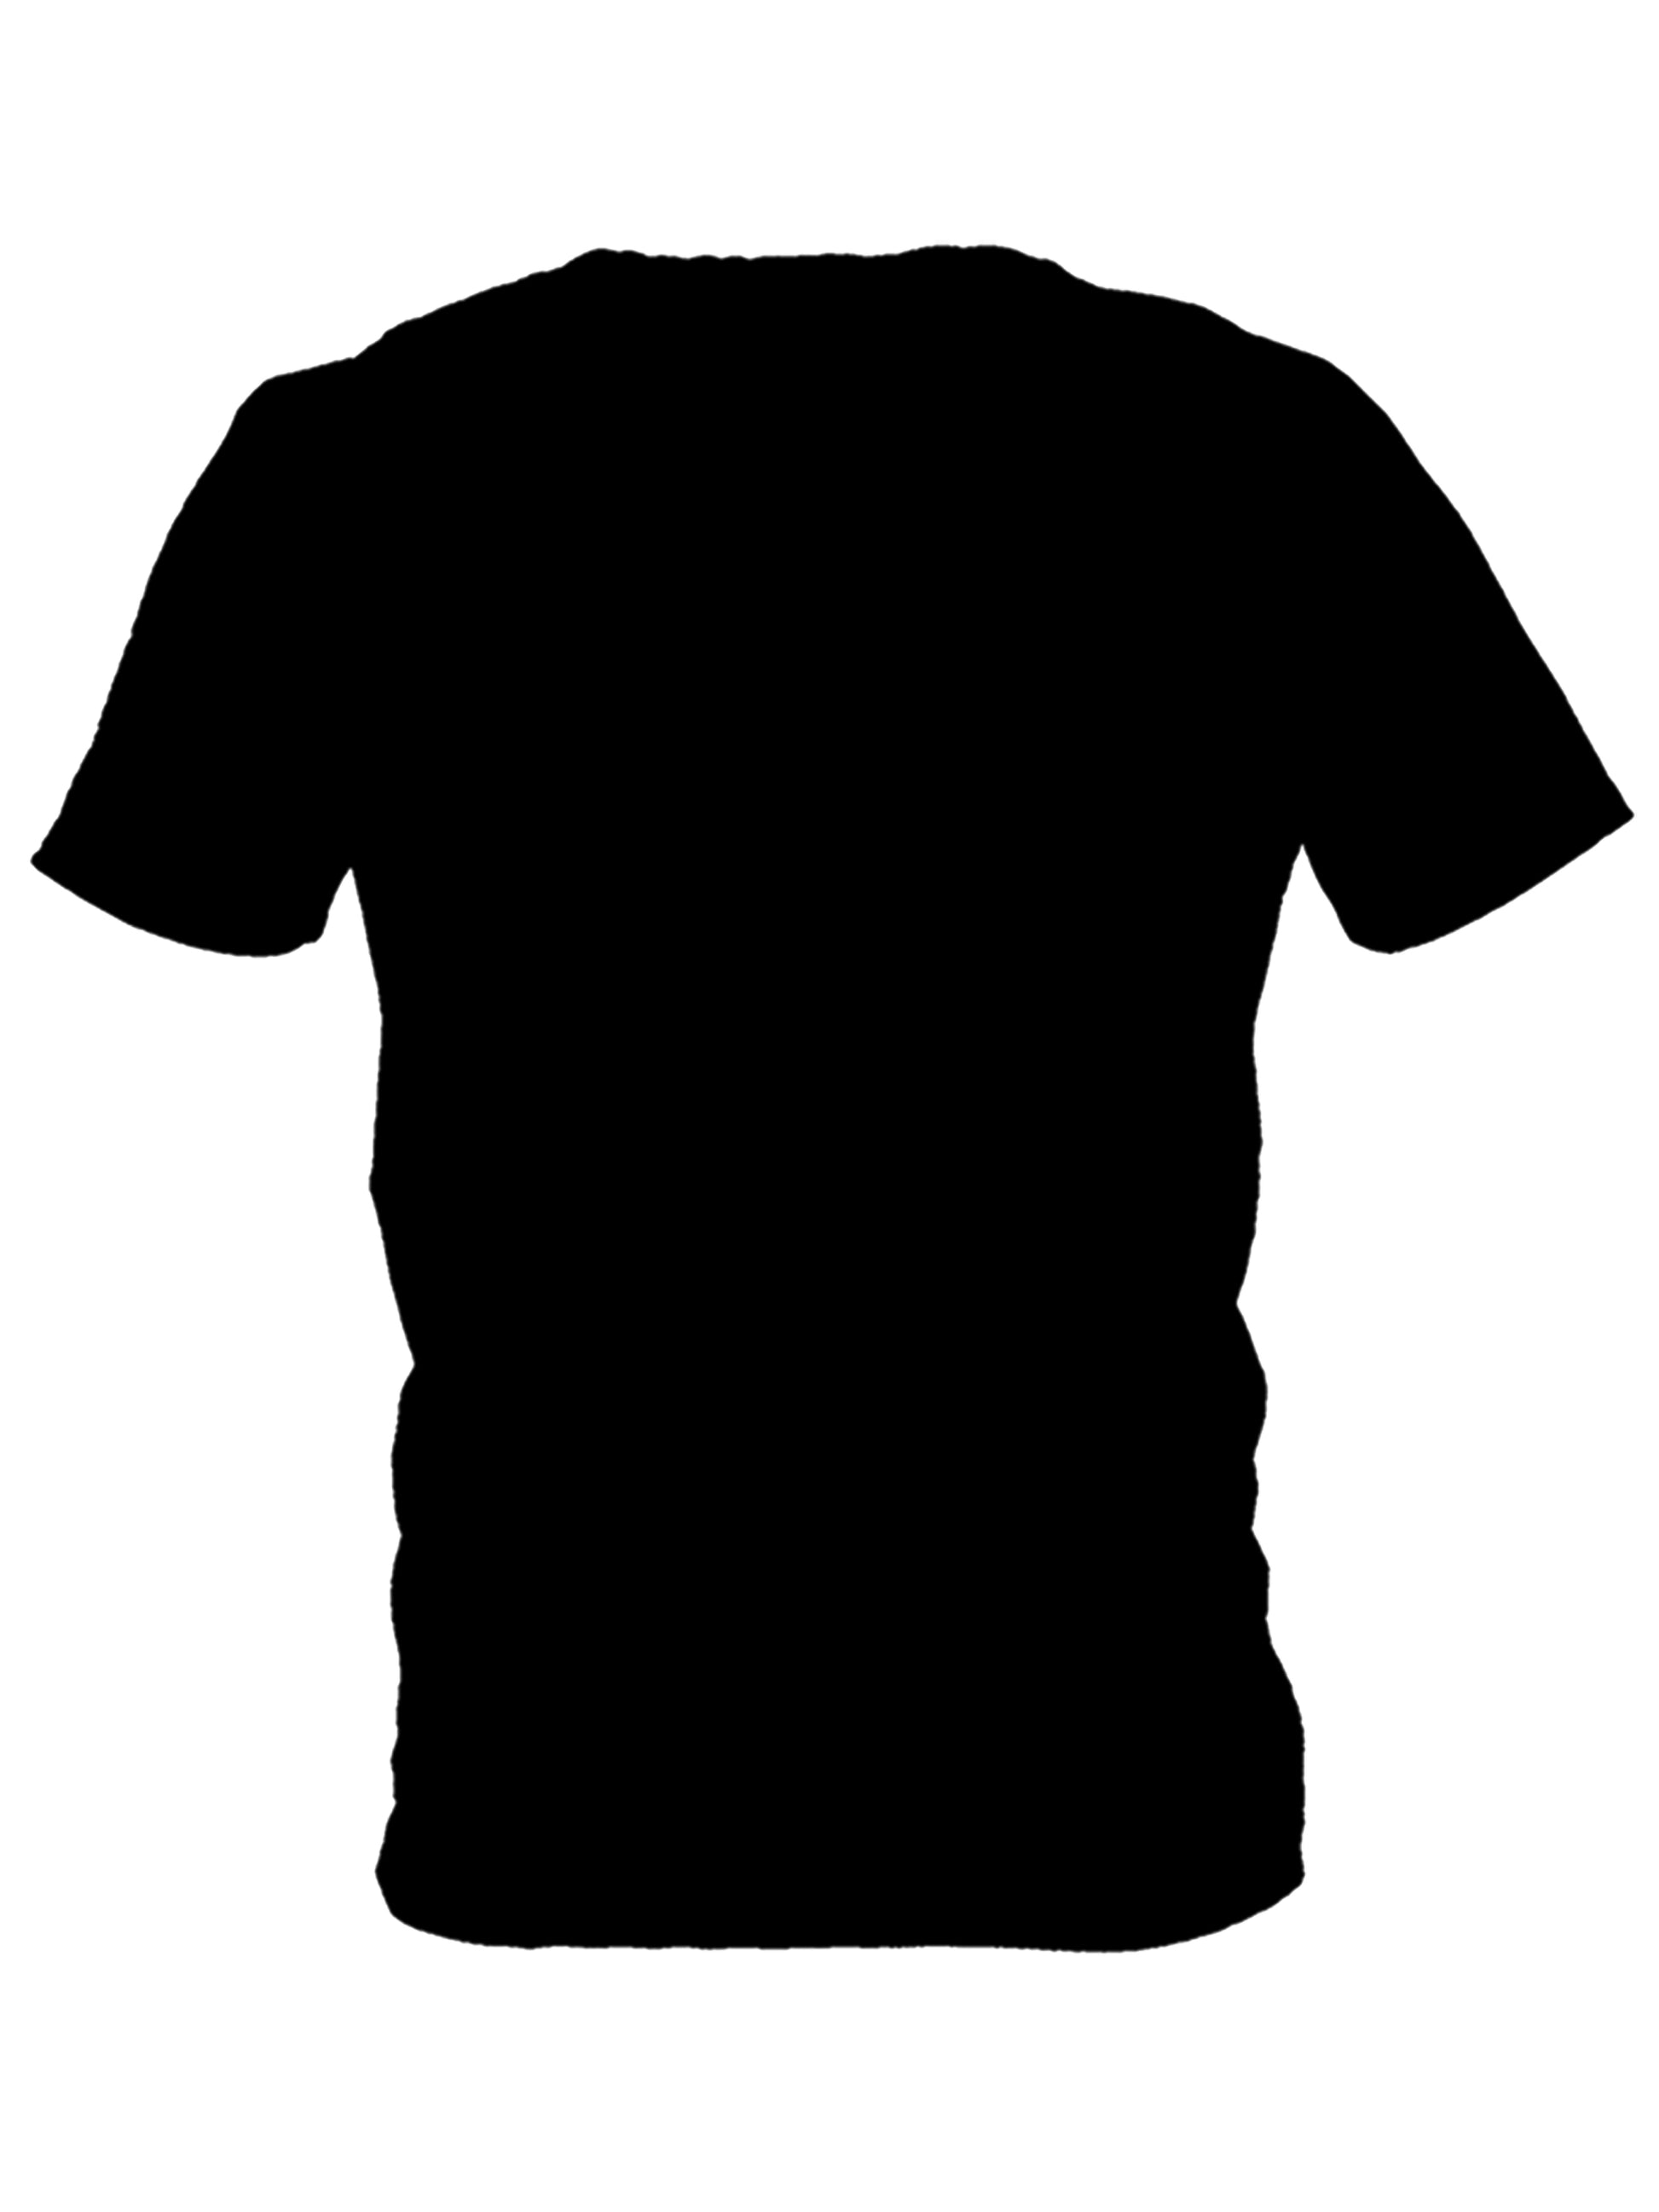 Blacklight Weed Men's Graphic T-Shirt, iEDM, | iEDM